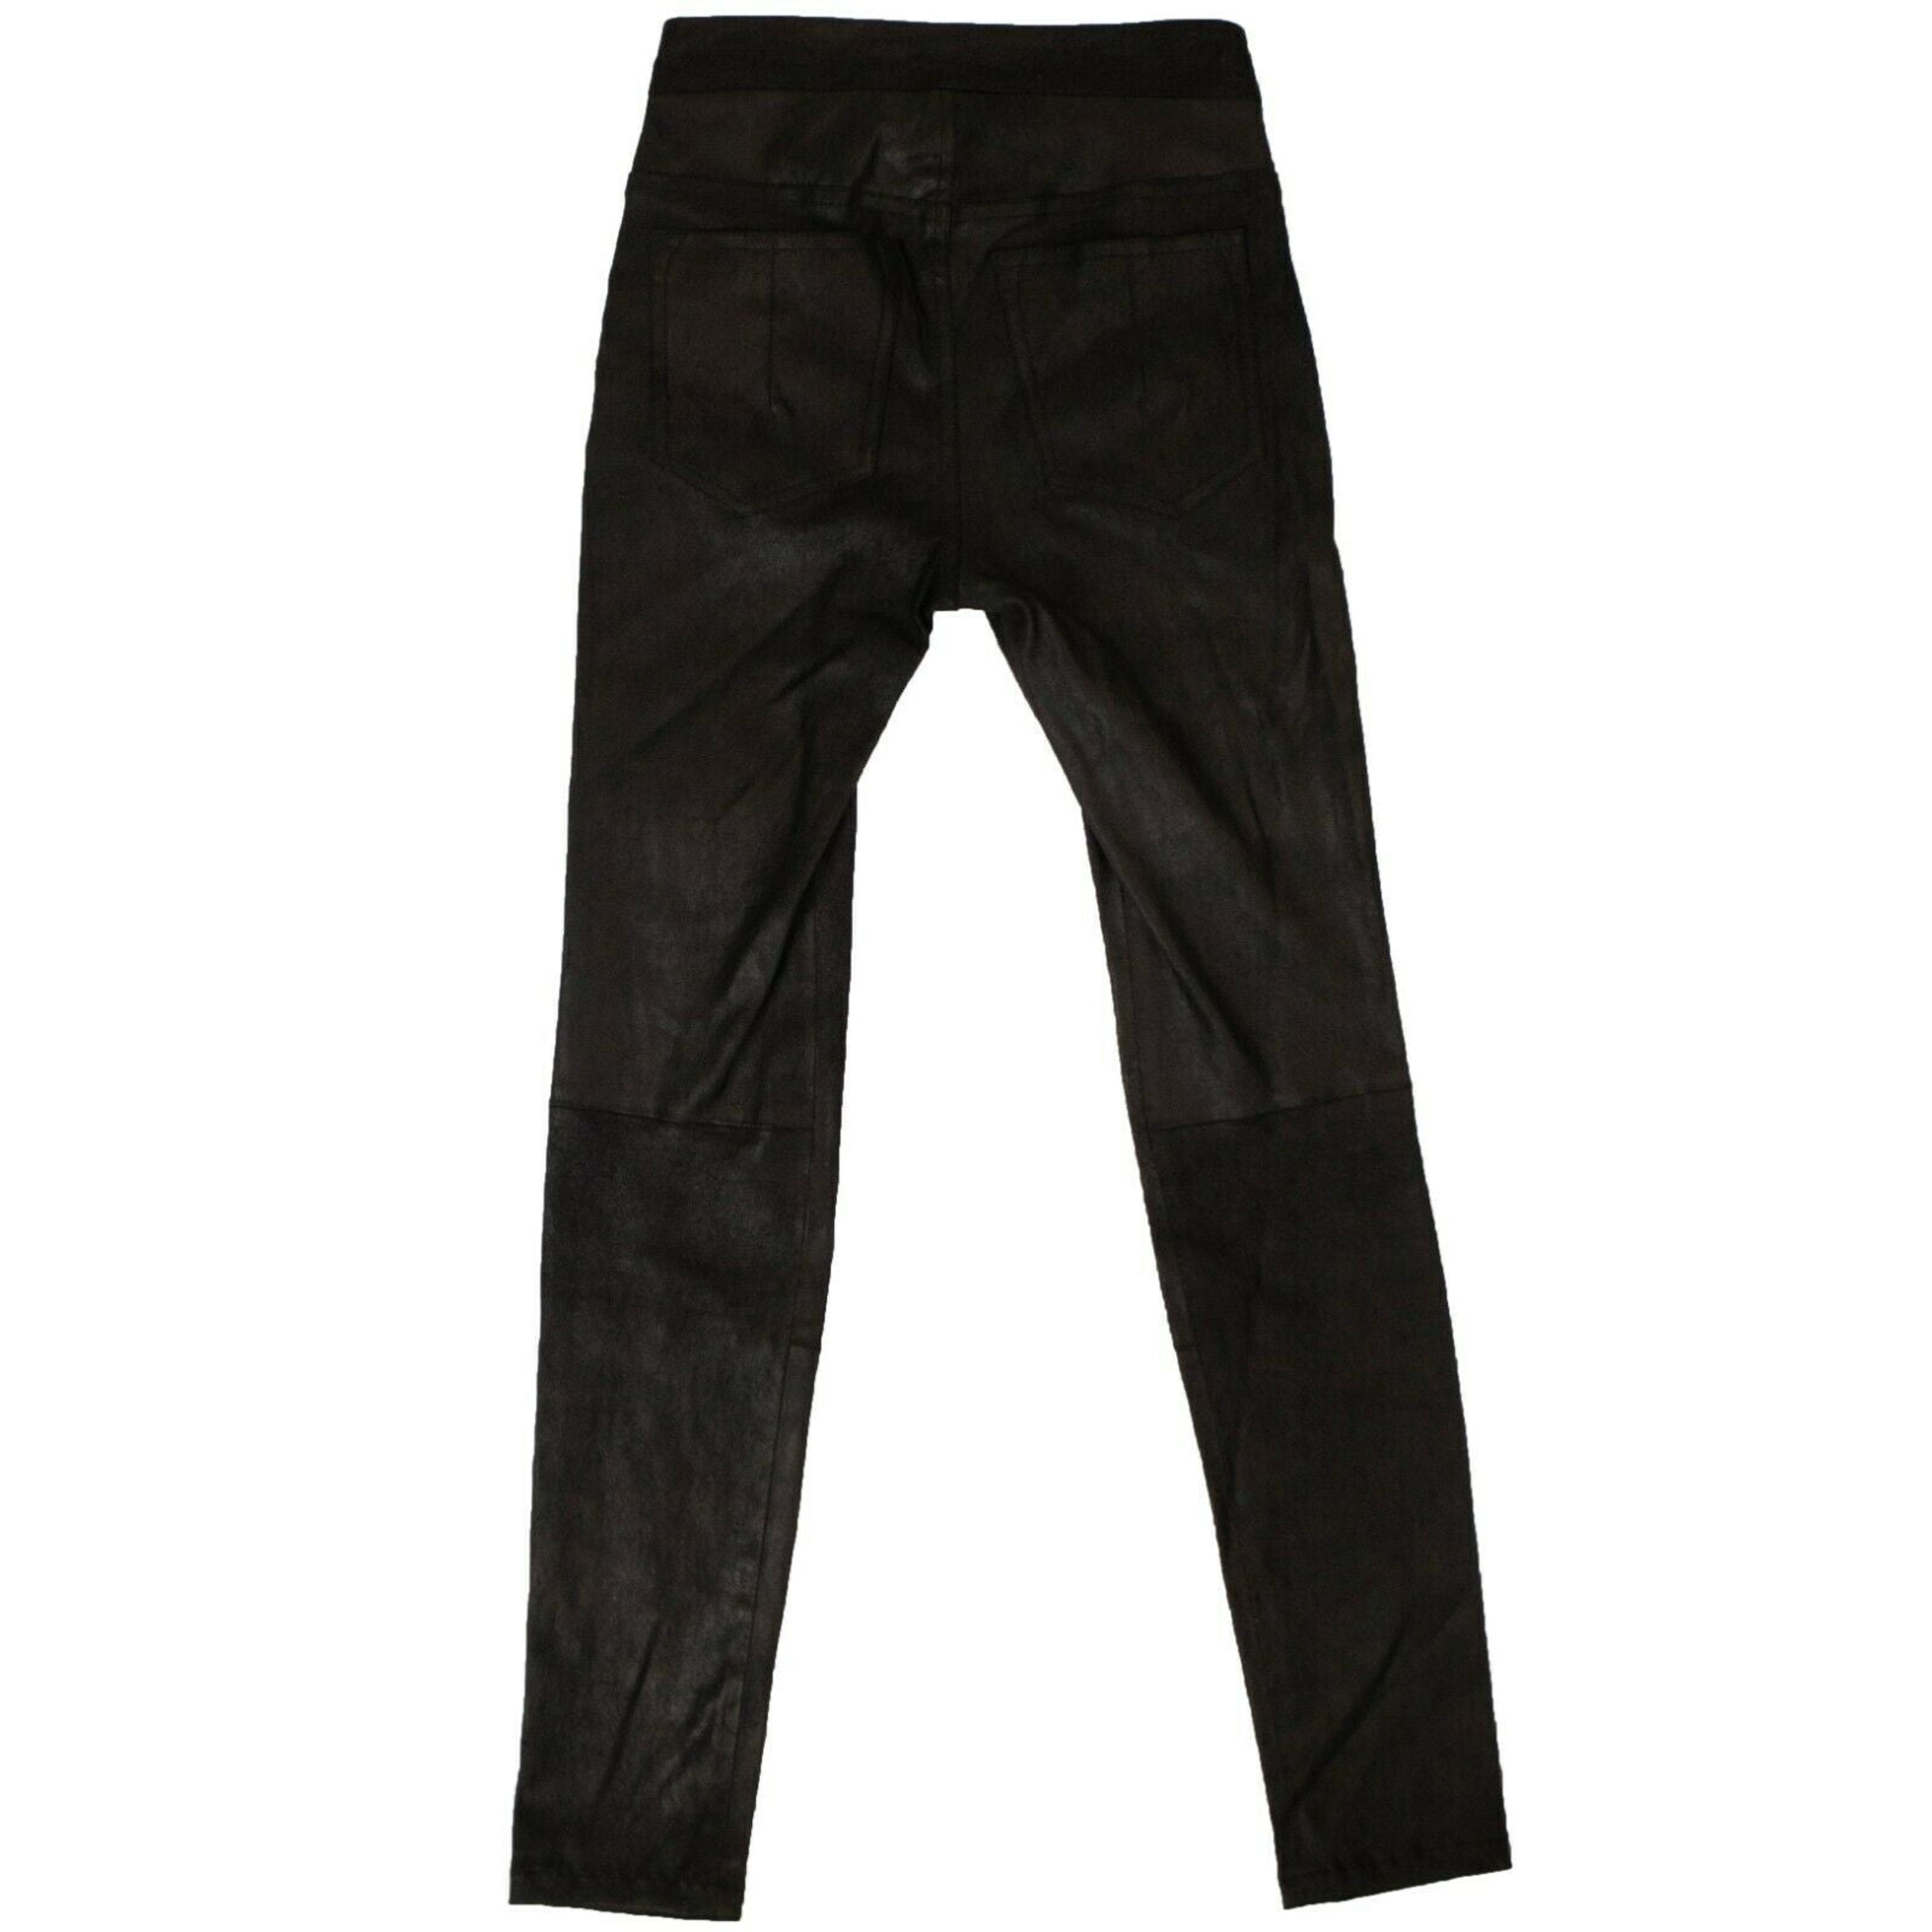 Alternate View 1 of Unravel Project Leather Slim Biker Pants - Black